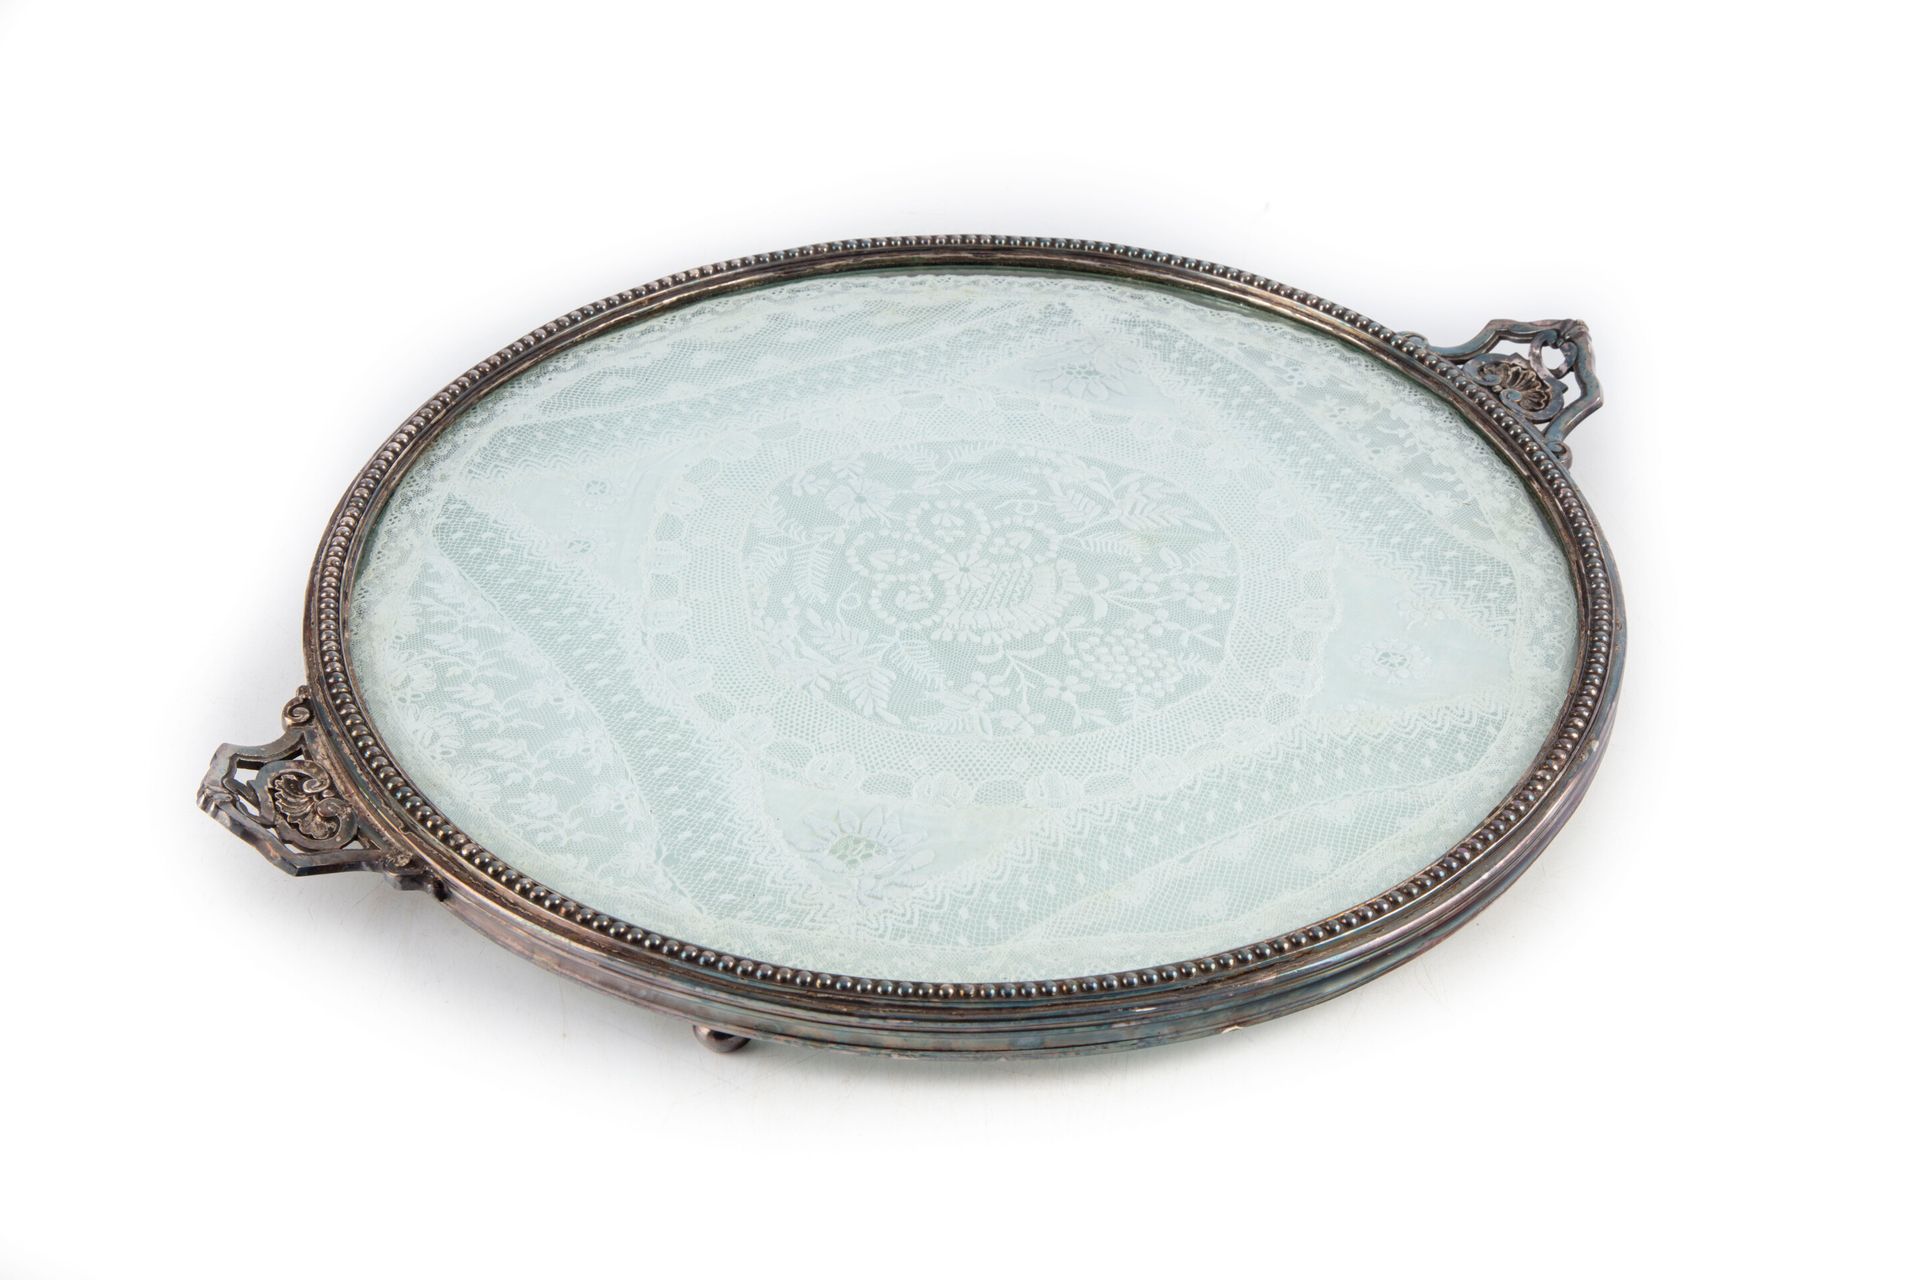 Null 圆形玻璃托盘，银色青铜框架，饰有珍珠门楣

D.38厘米